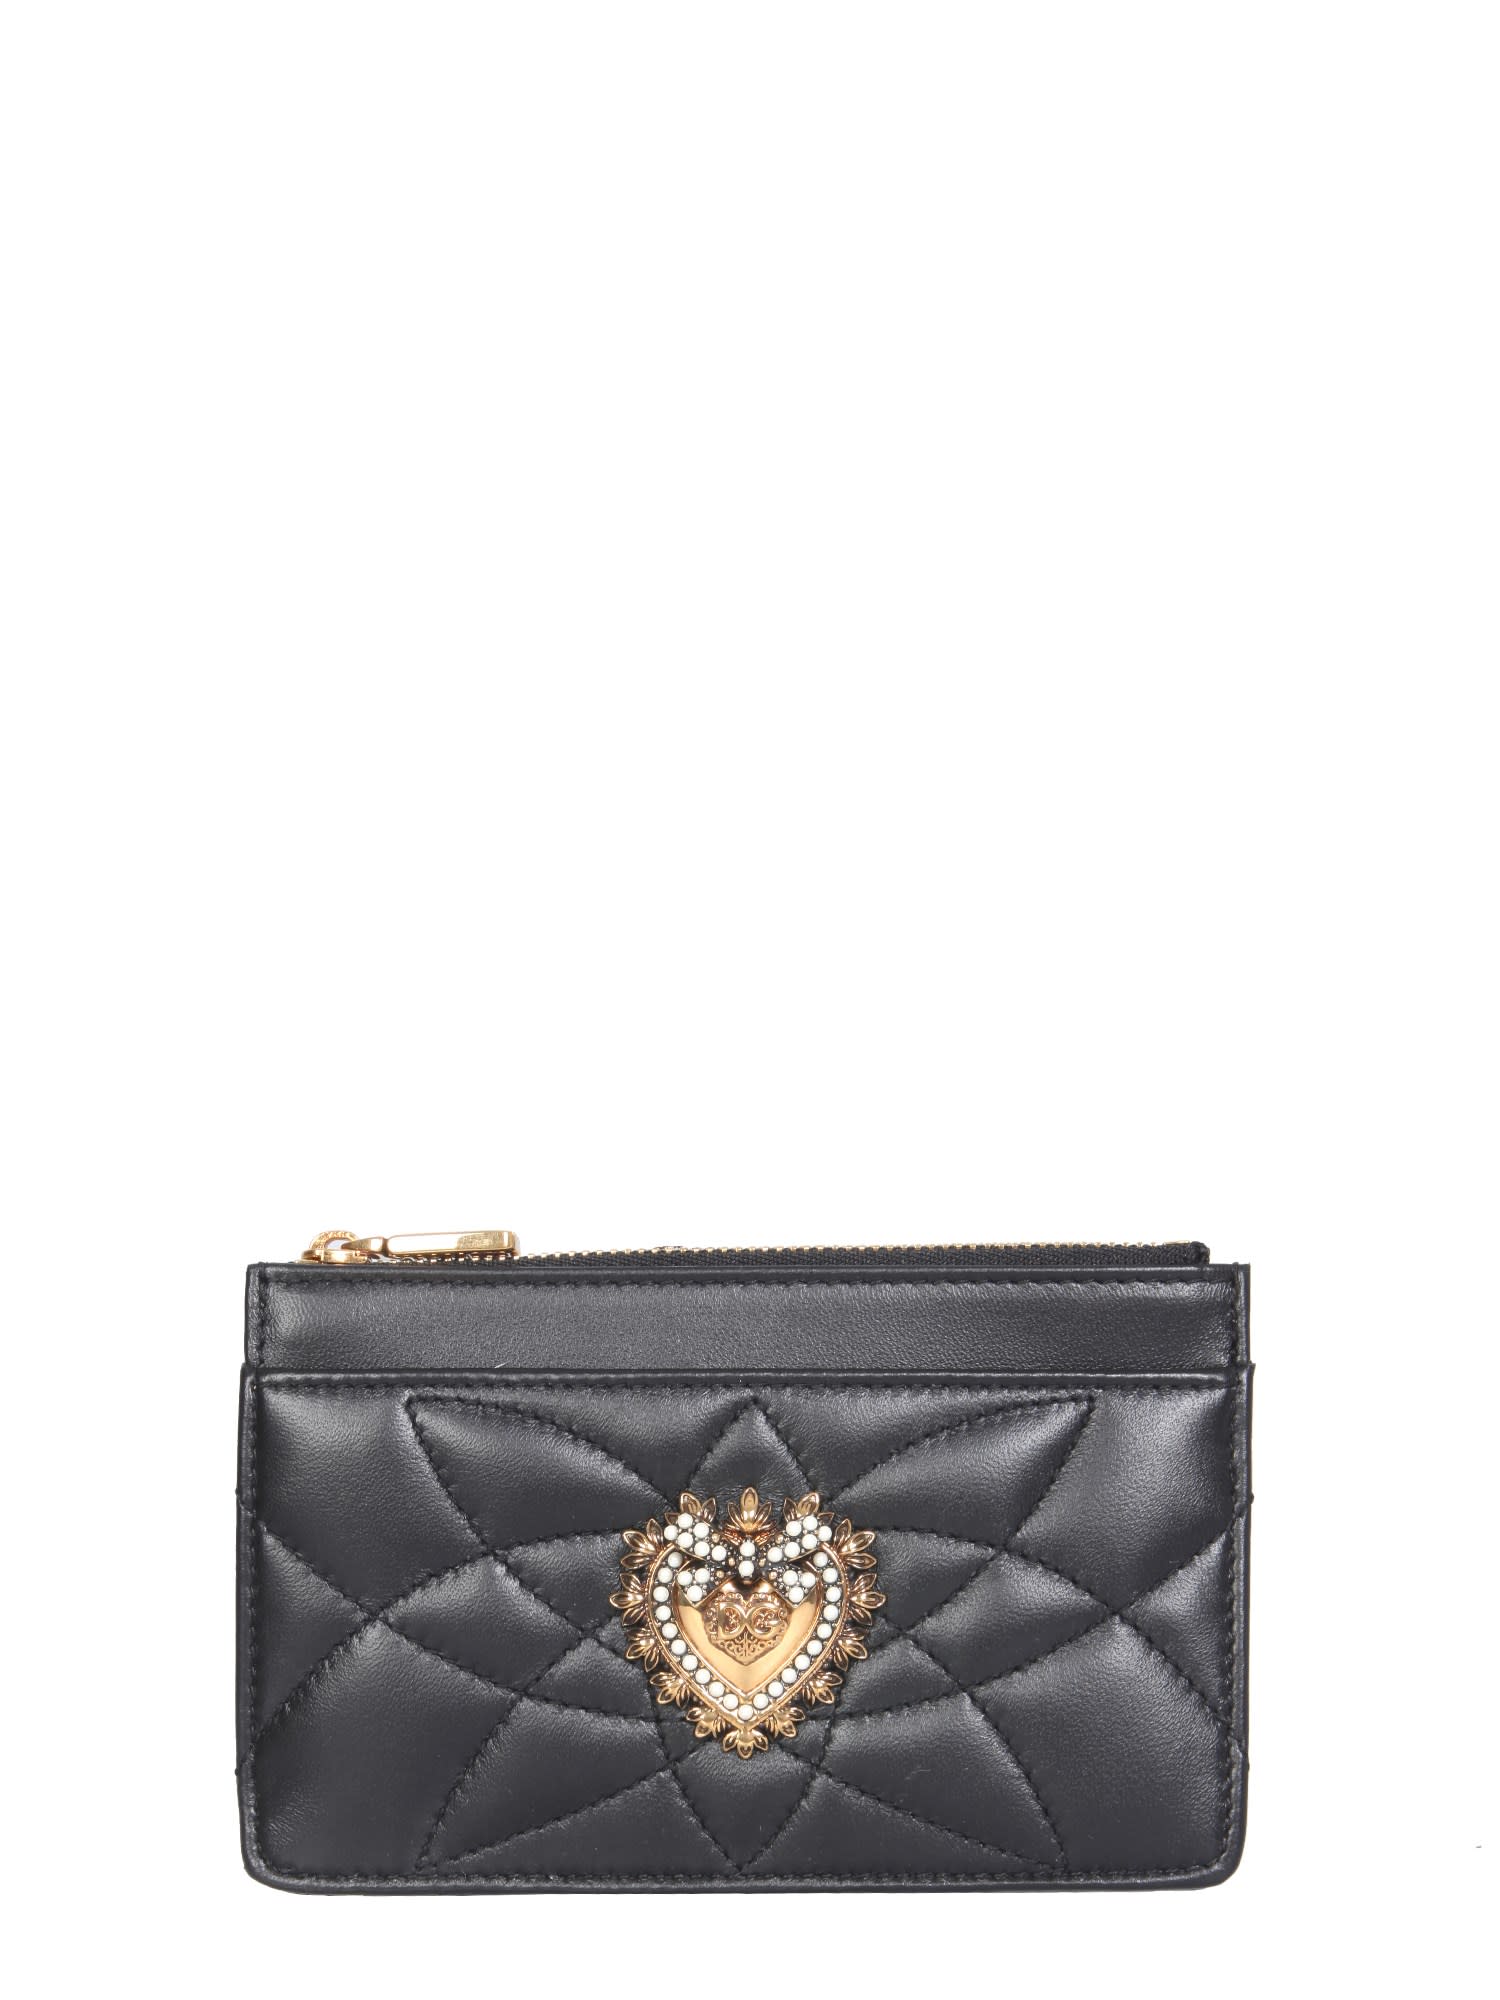 Dolce & Gabbana Devotion Leather Card Holder